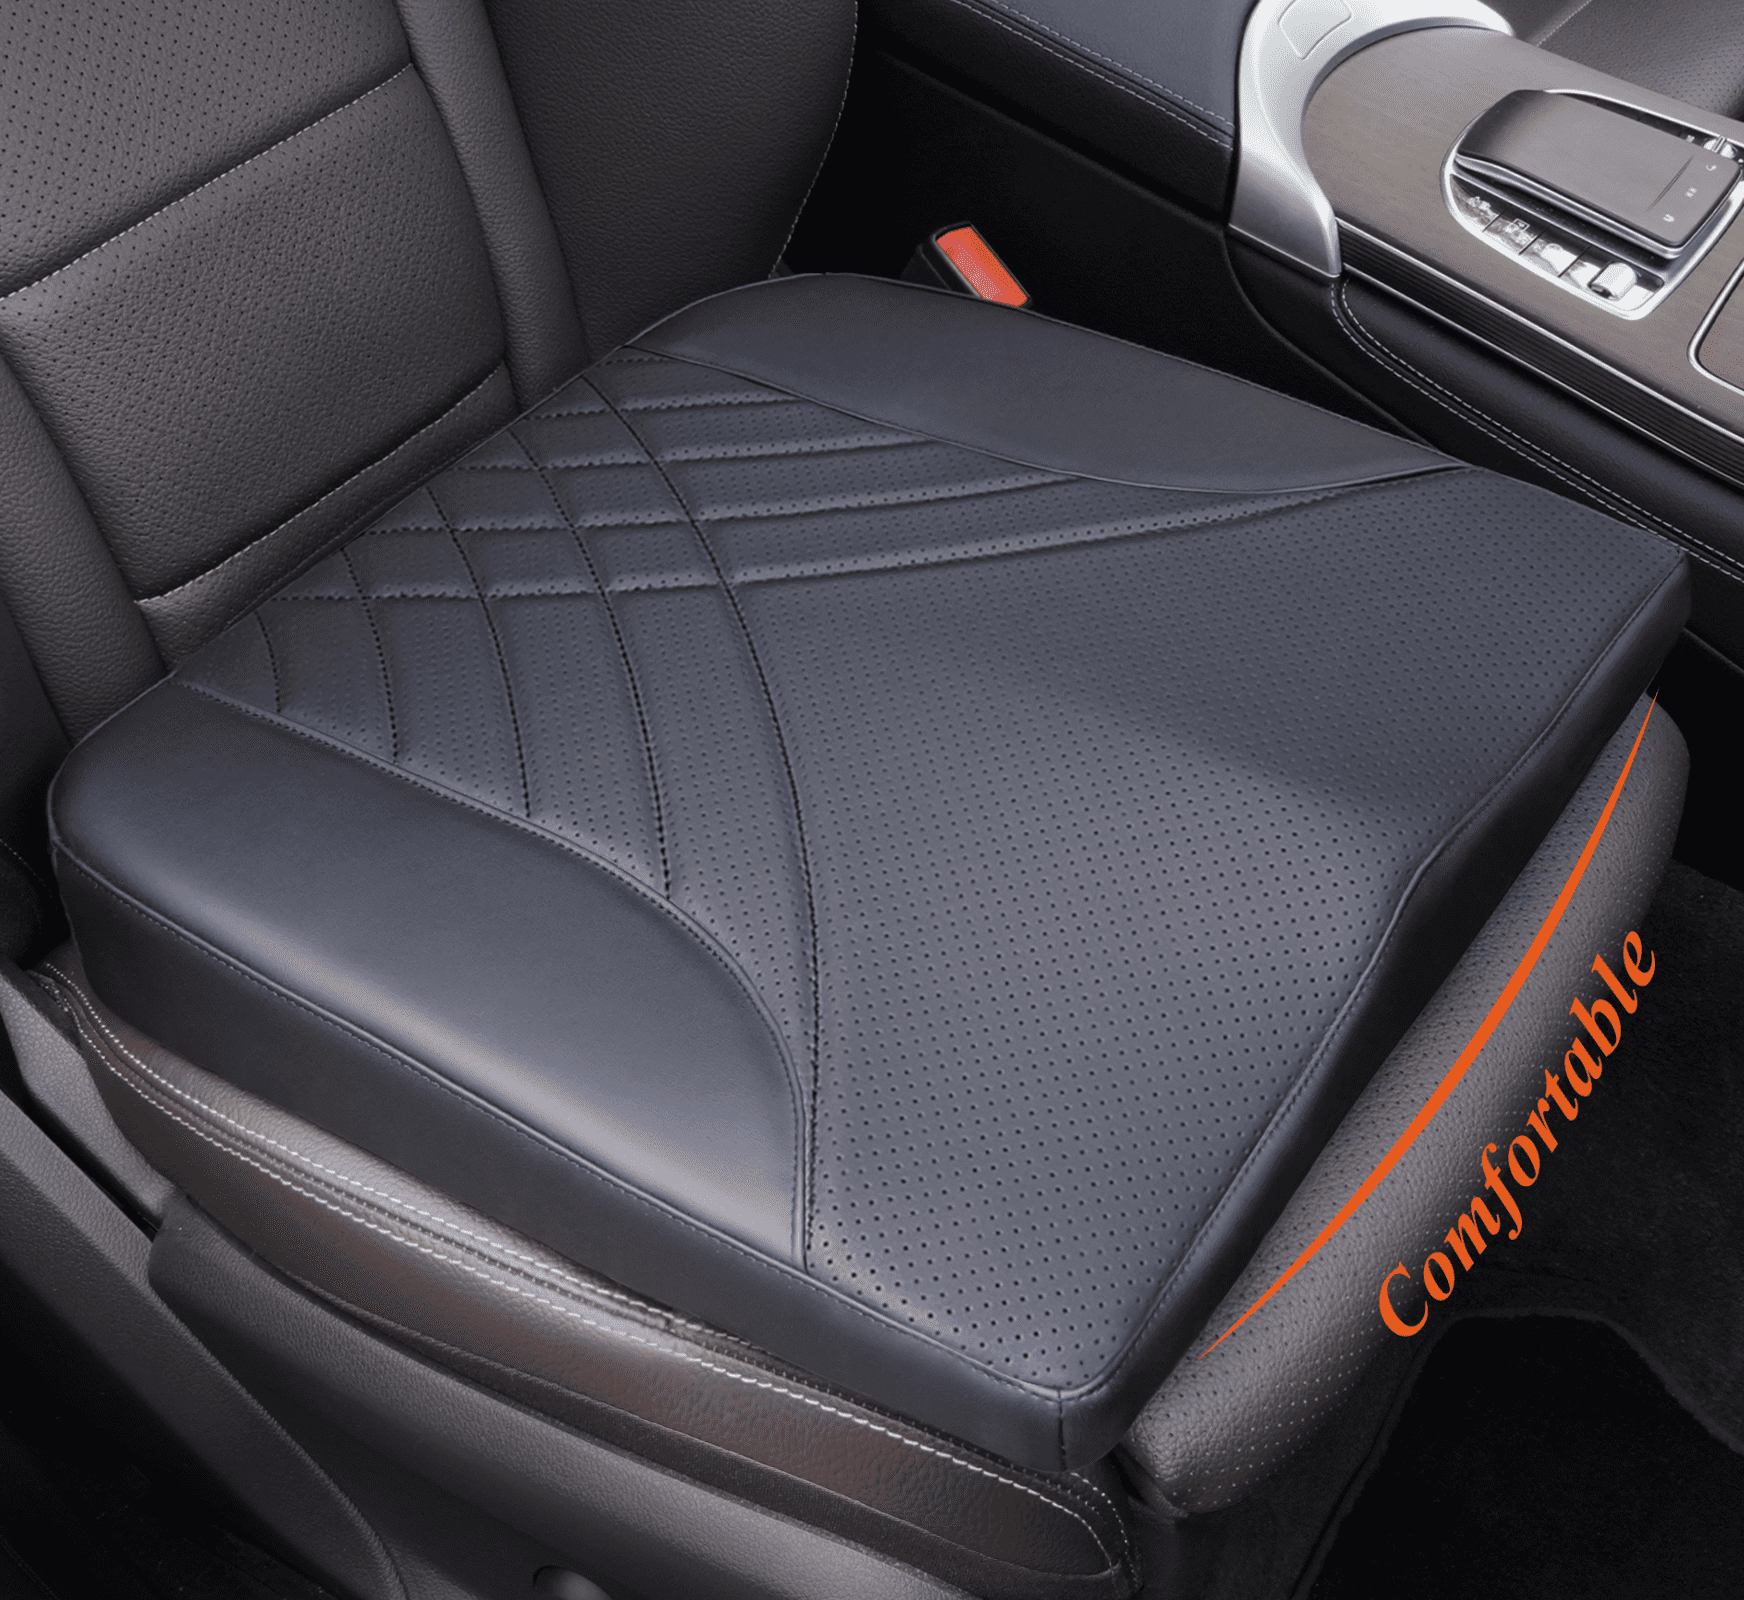 Stalwart Car Seat Cushion - 1.2 in.-Thick Memory Foam Seat Pad